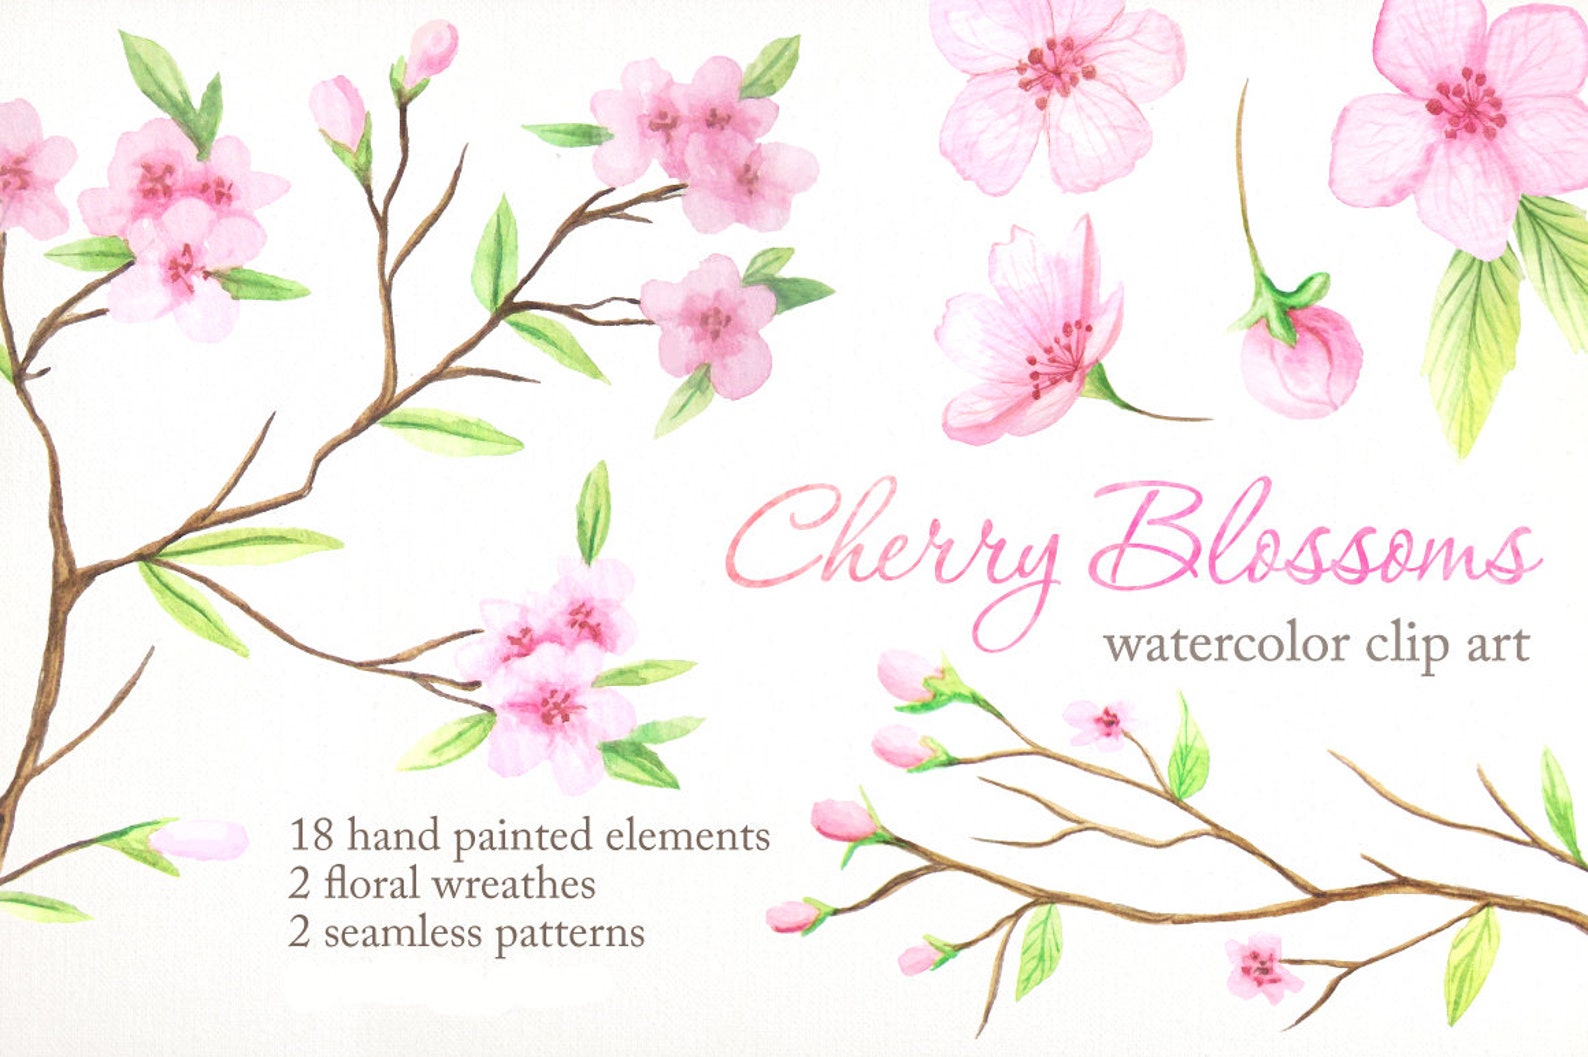 Цветы вишни акварель фон. Цветущая вишня акварель скетч. Watercolor Cherry Blossom Floral and leaves Card. Hand drawn Watercolor Cherry Blossom Invitation Card Template.